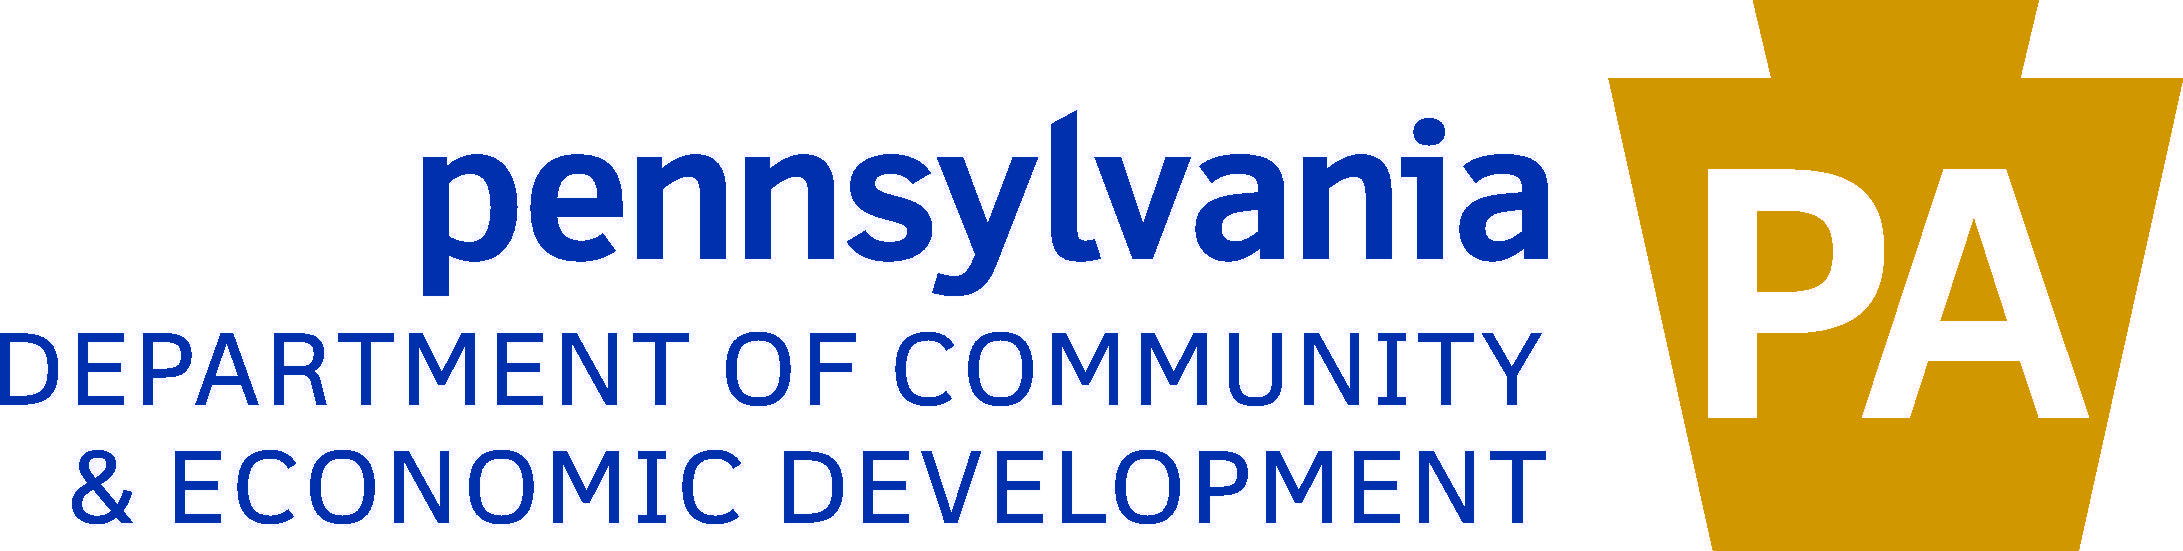 PennDOT Logo - Logo Use Guidelines Department of Community & Economic Development